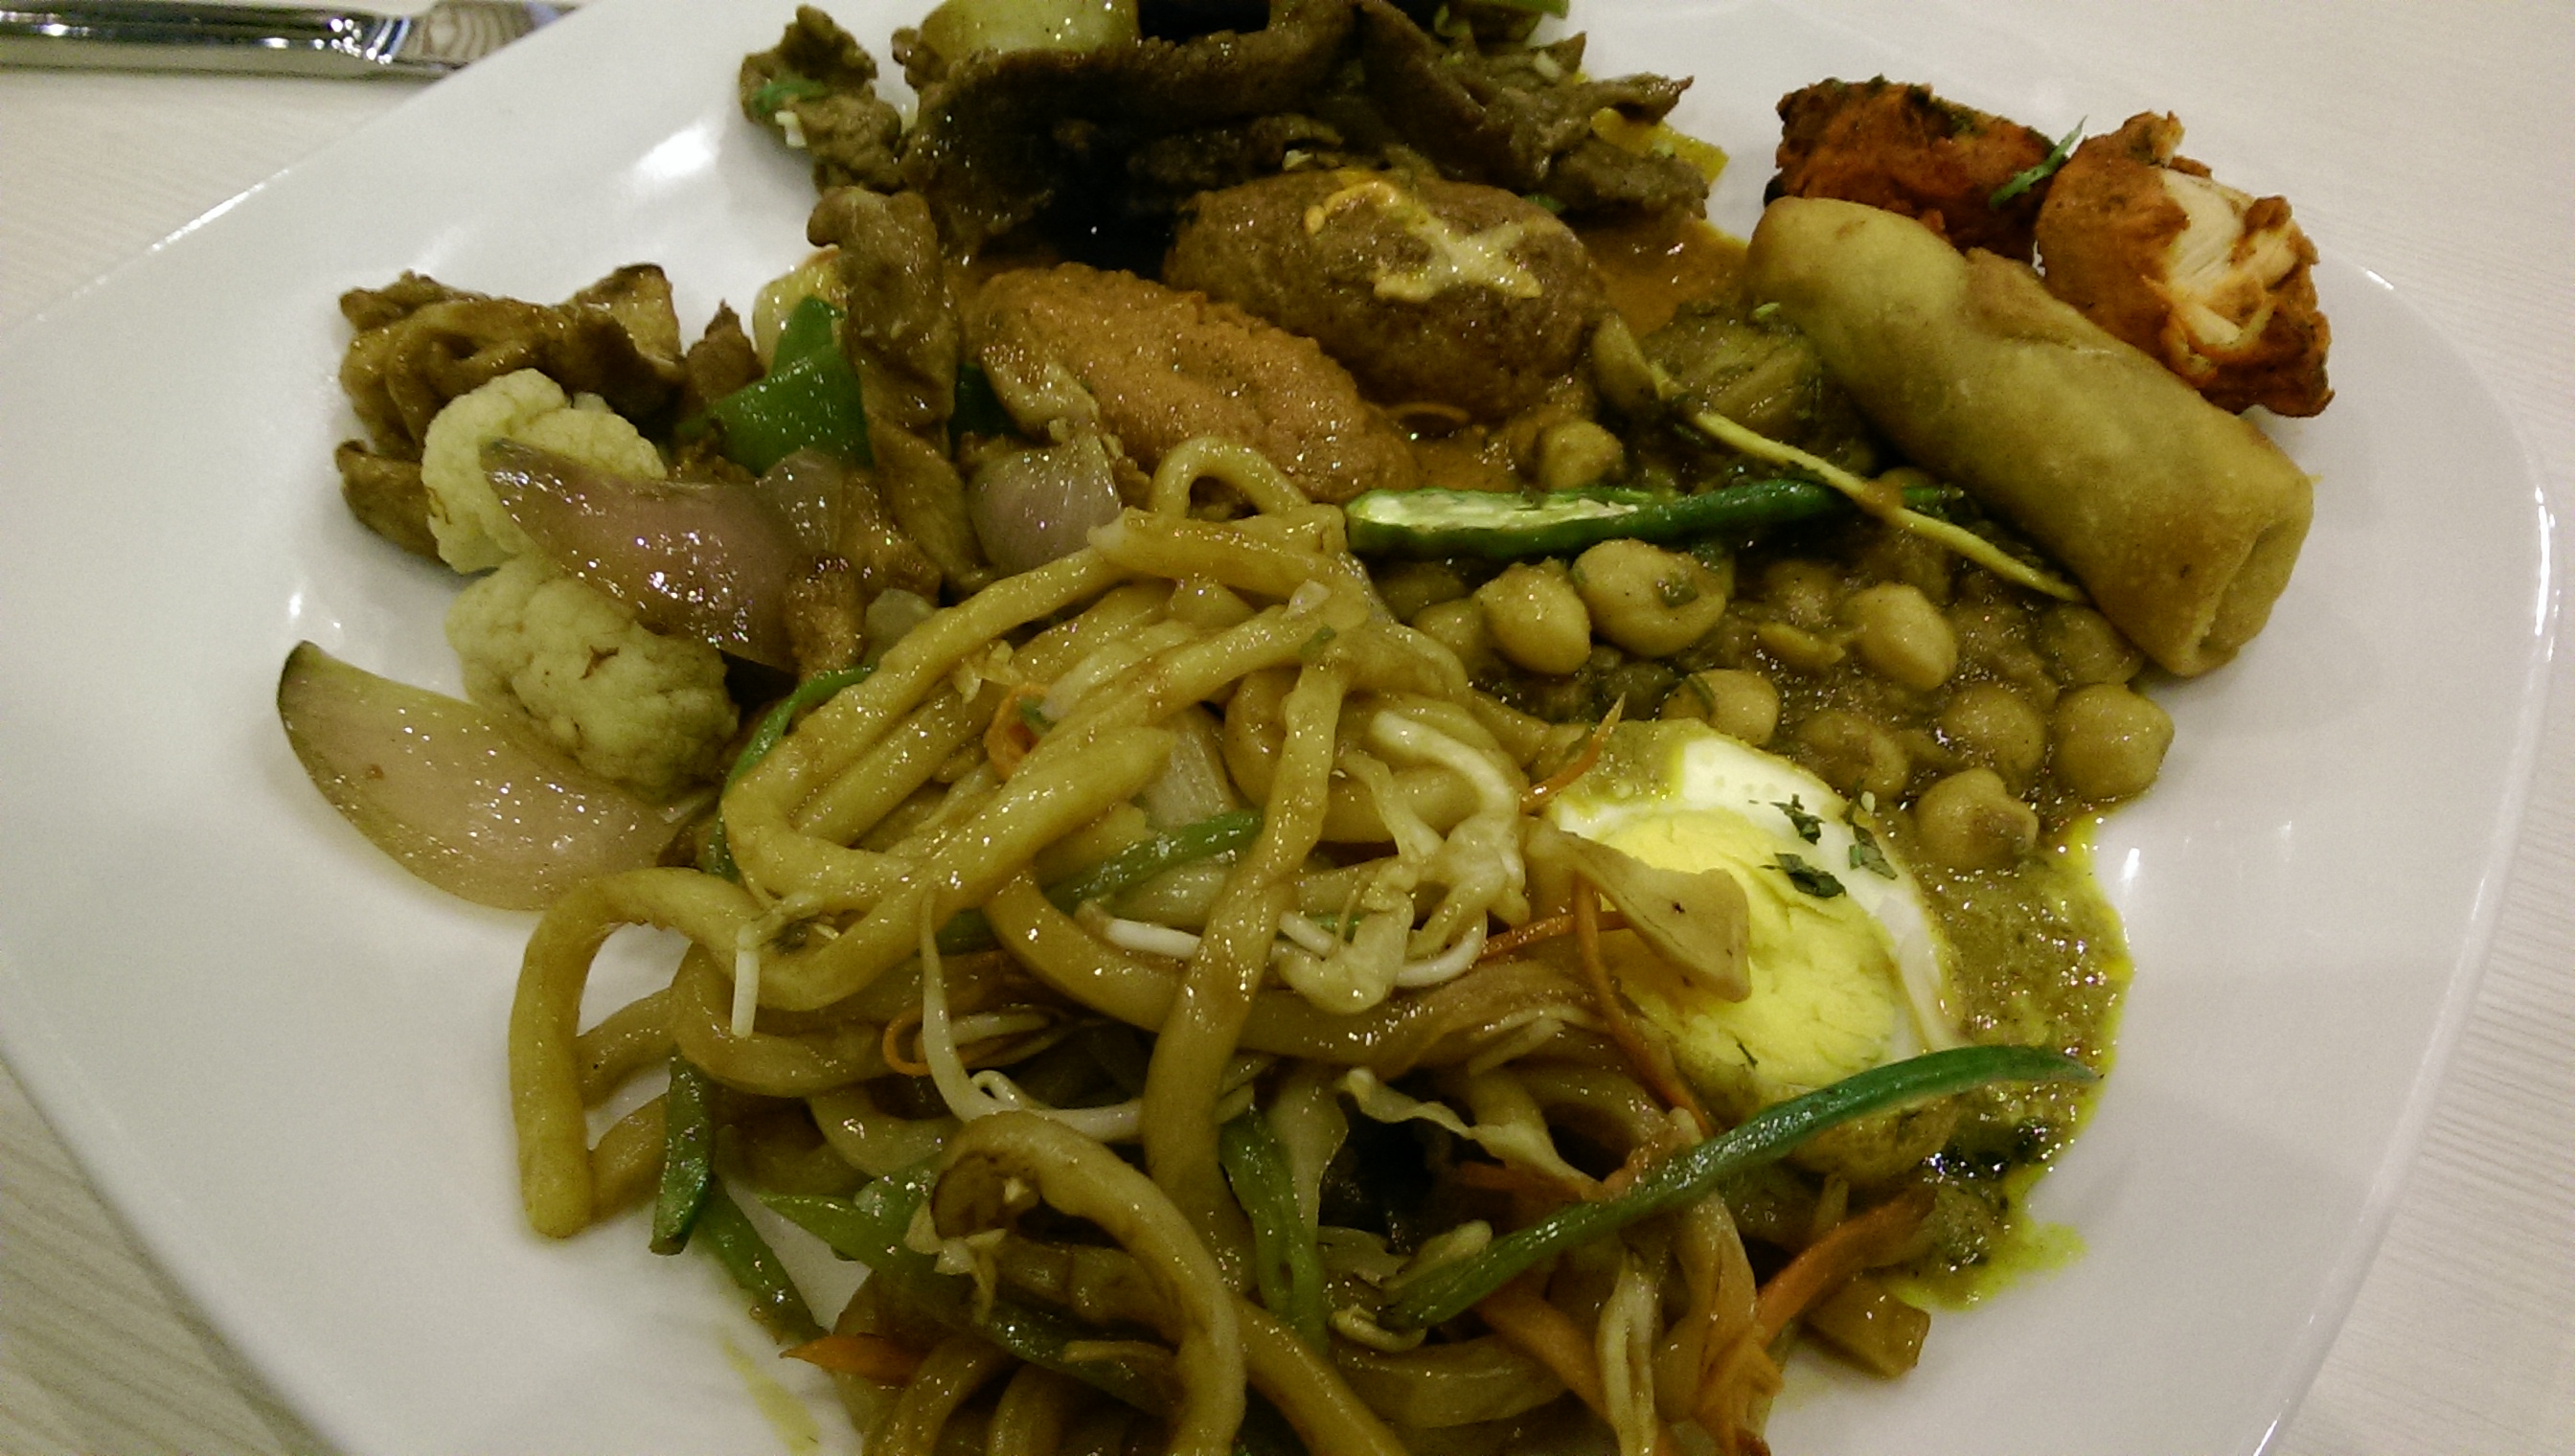 Qureshi&Wong, Indian & Chinese Restaurant یک رستوران هندی-چینی با خوراکی های خوشمزه و مناسب